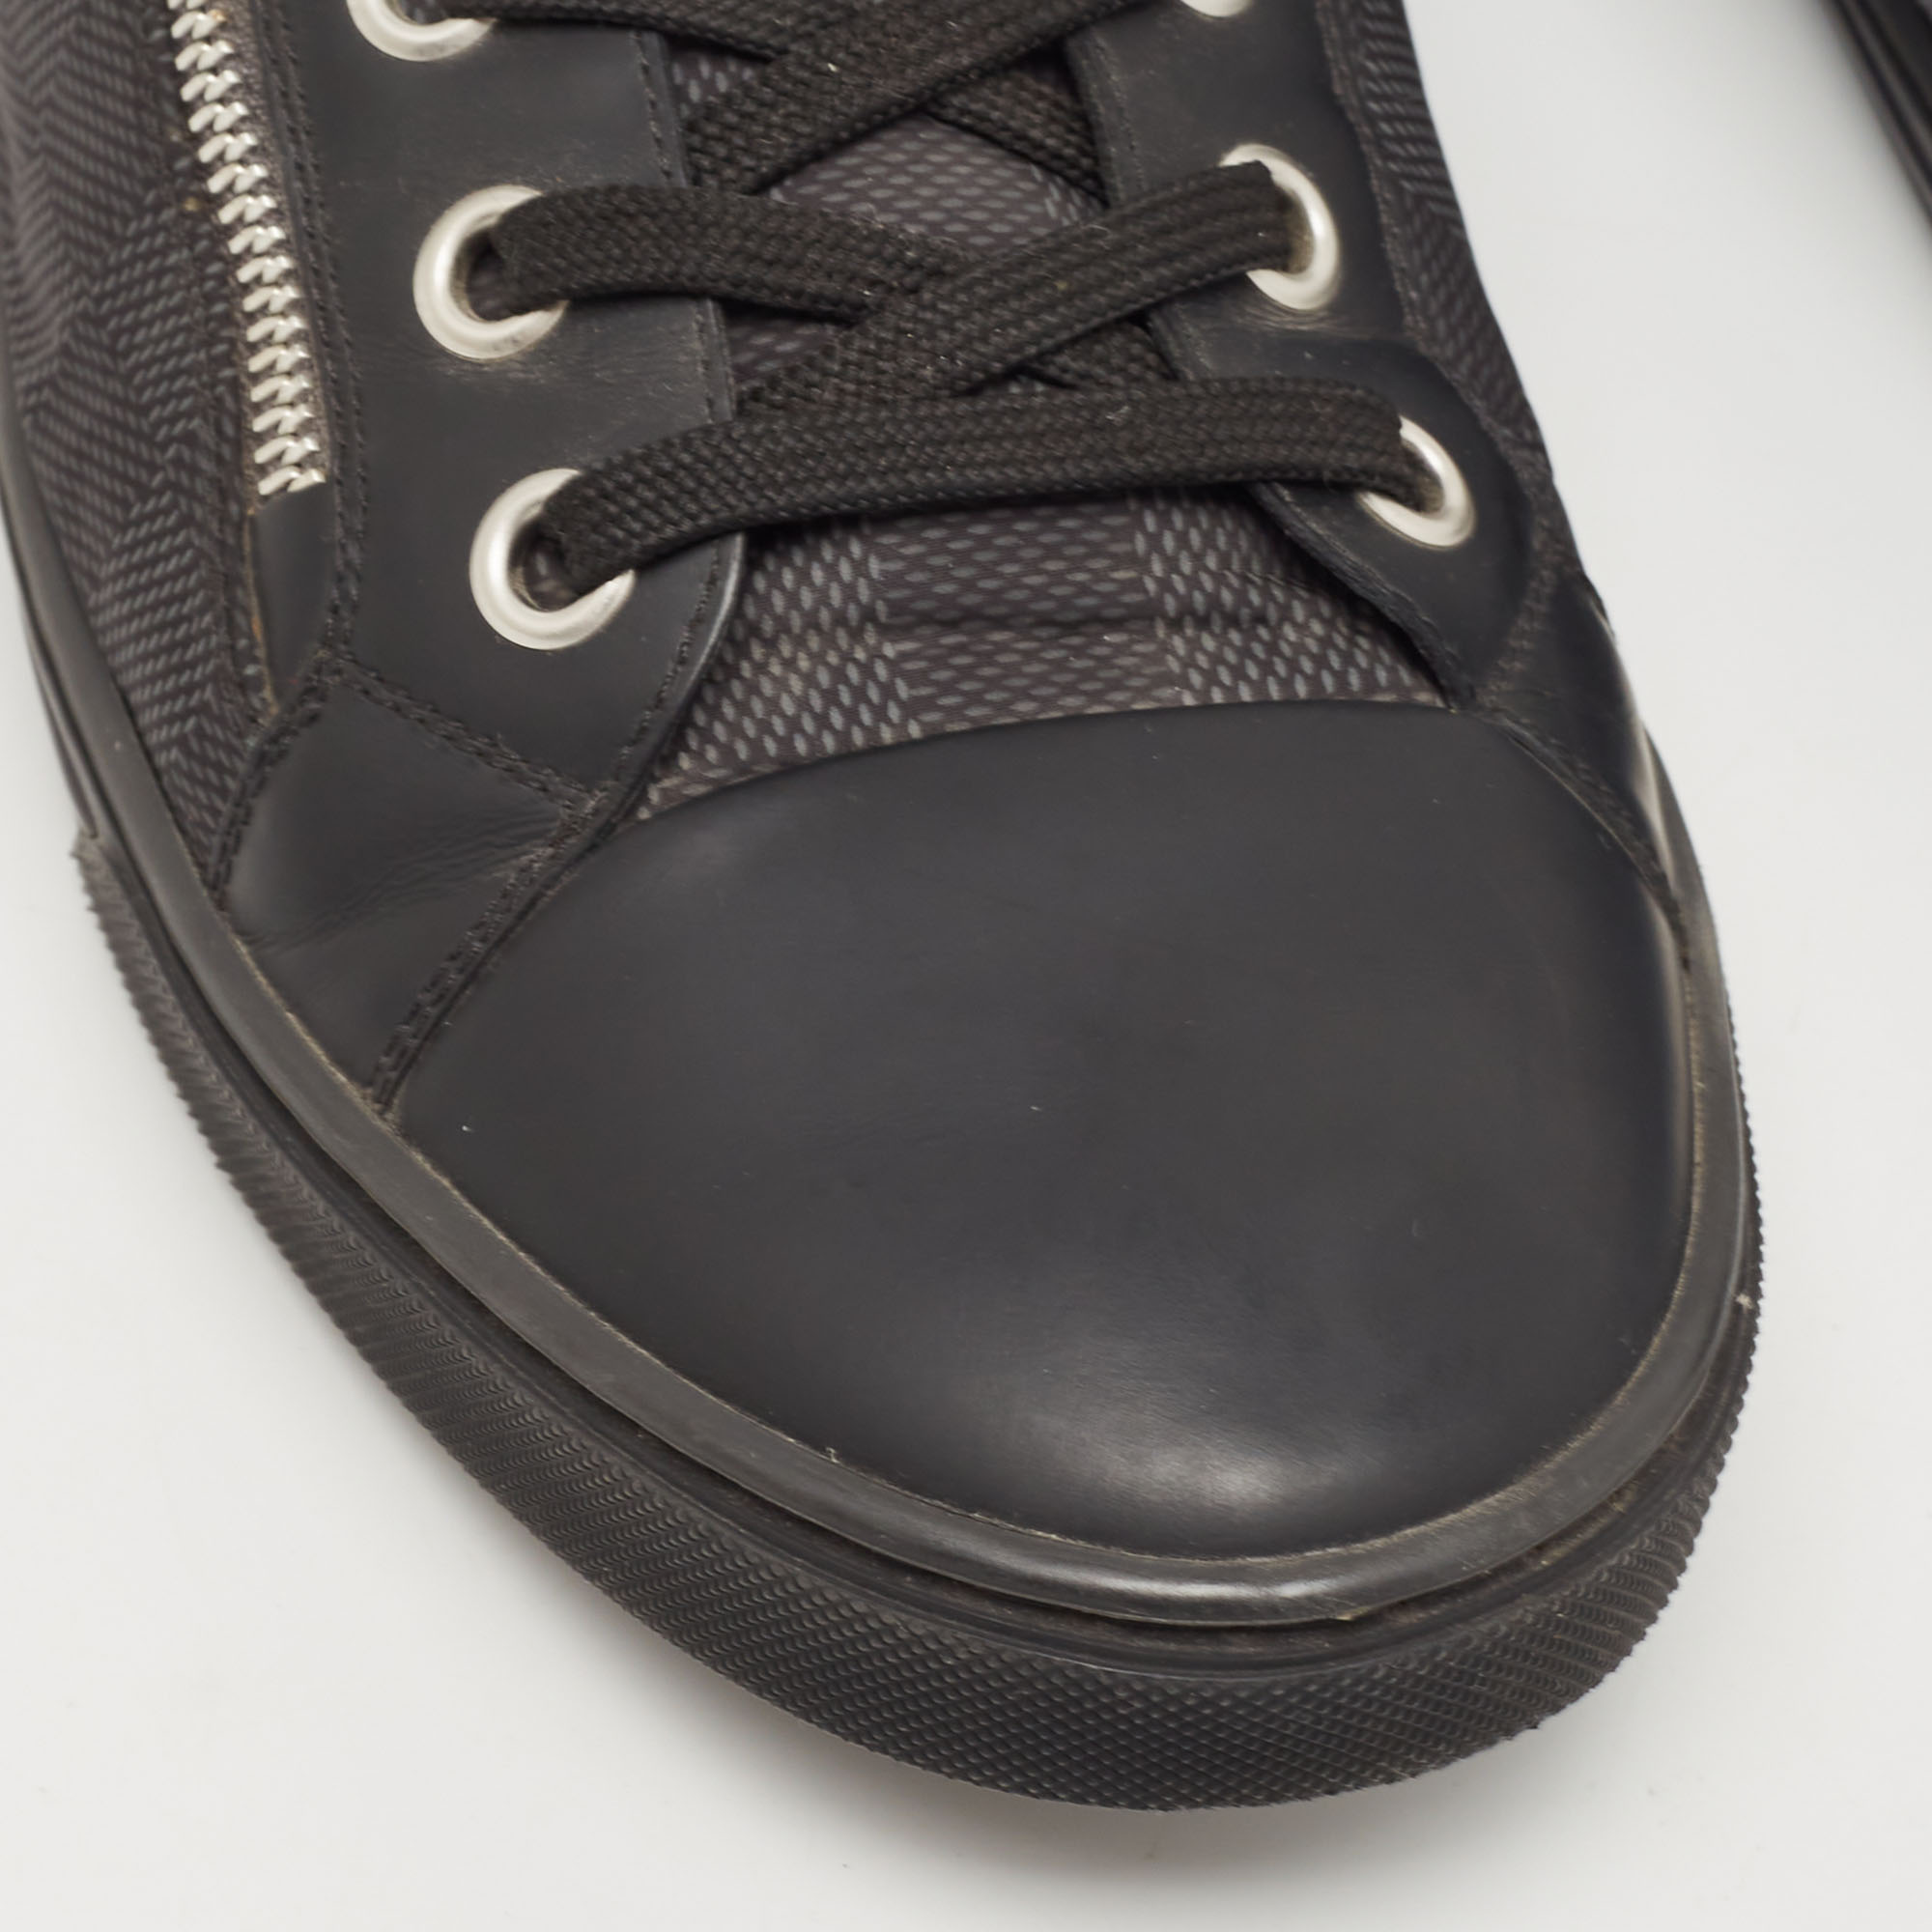 Louis Vuitton Black Damier Ebene Nylon And Leather Sneakers Size 43